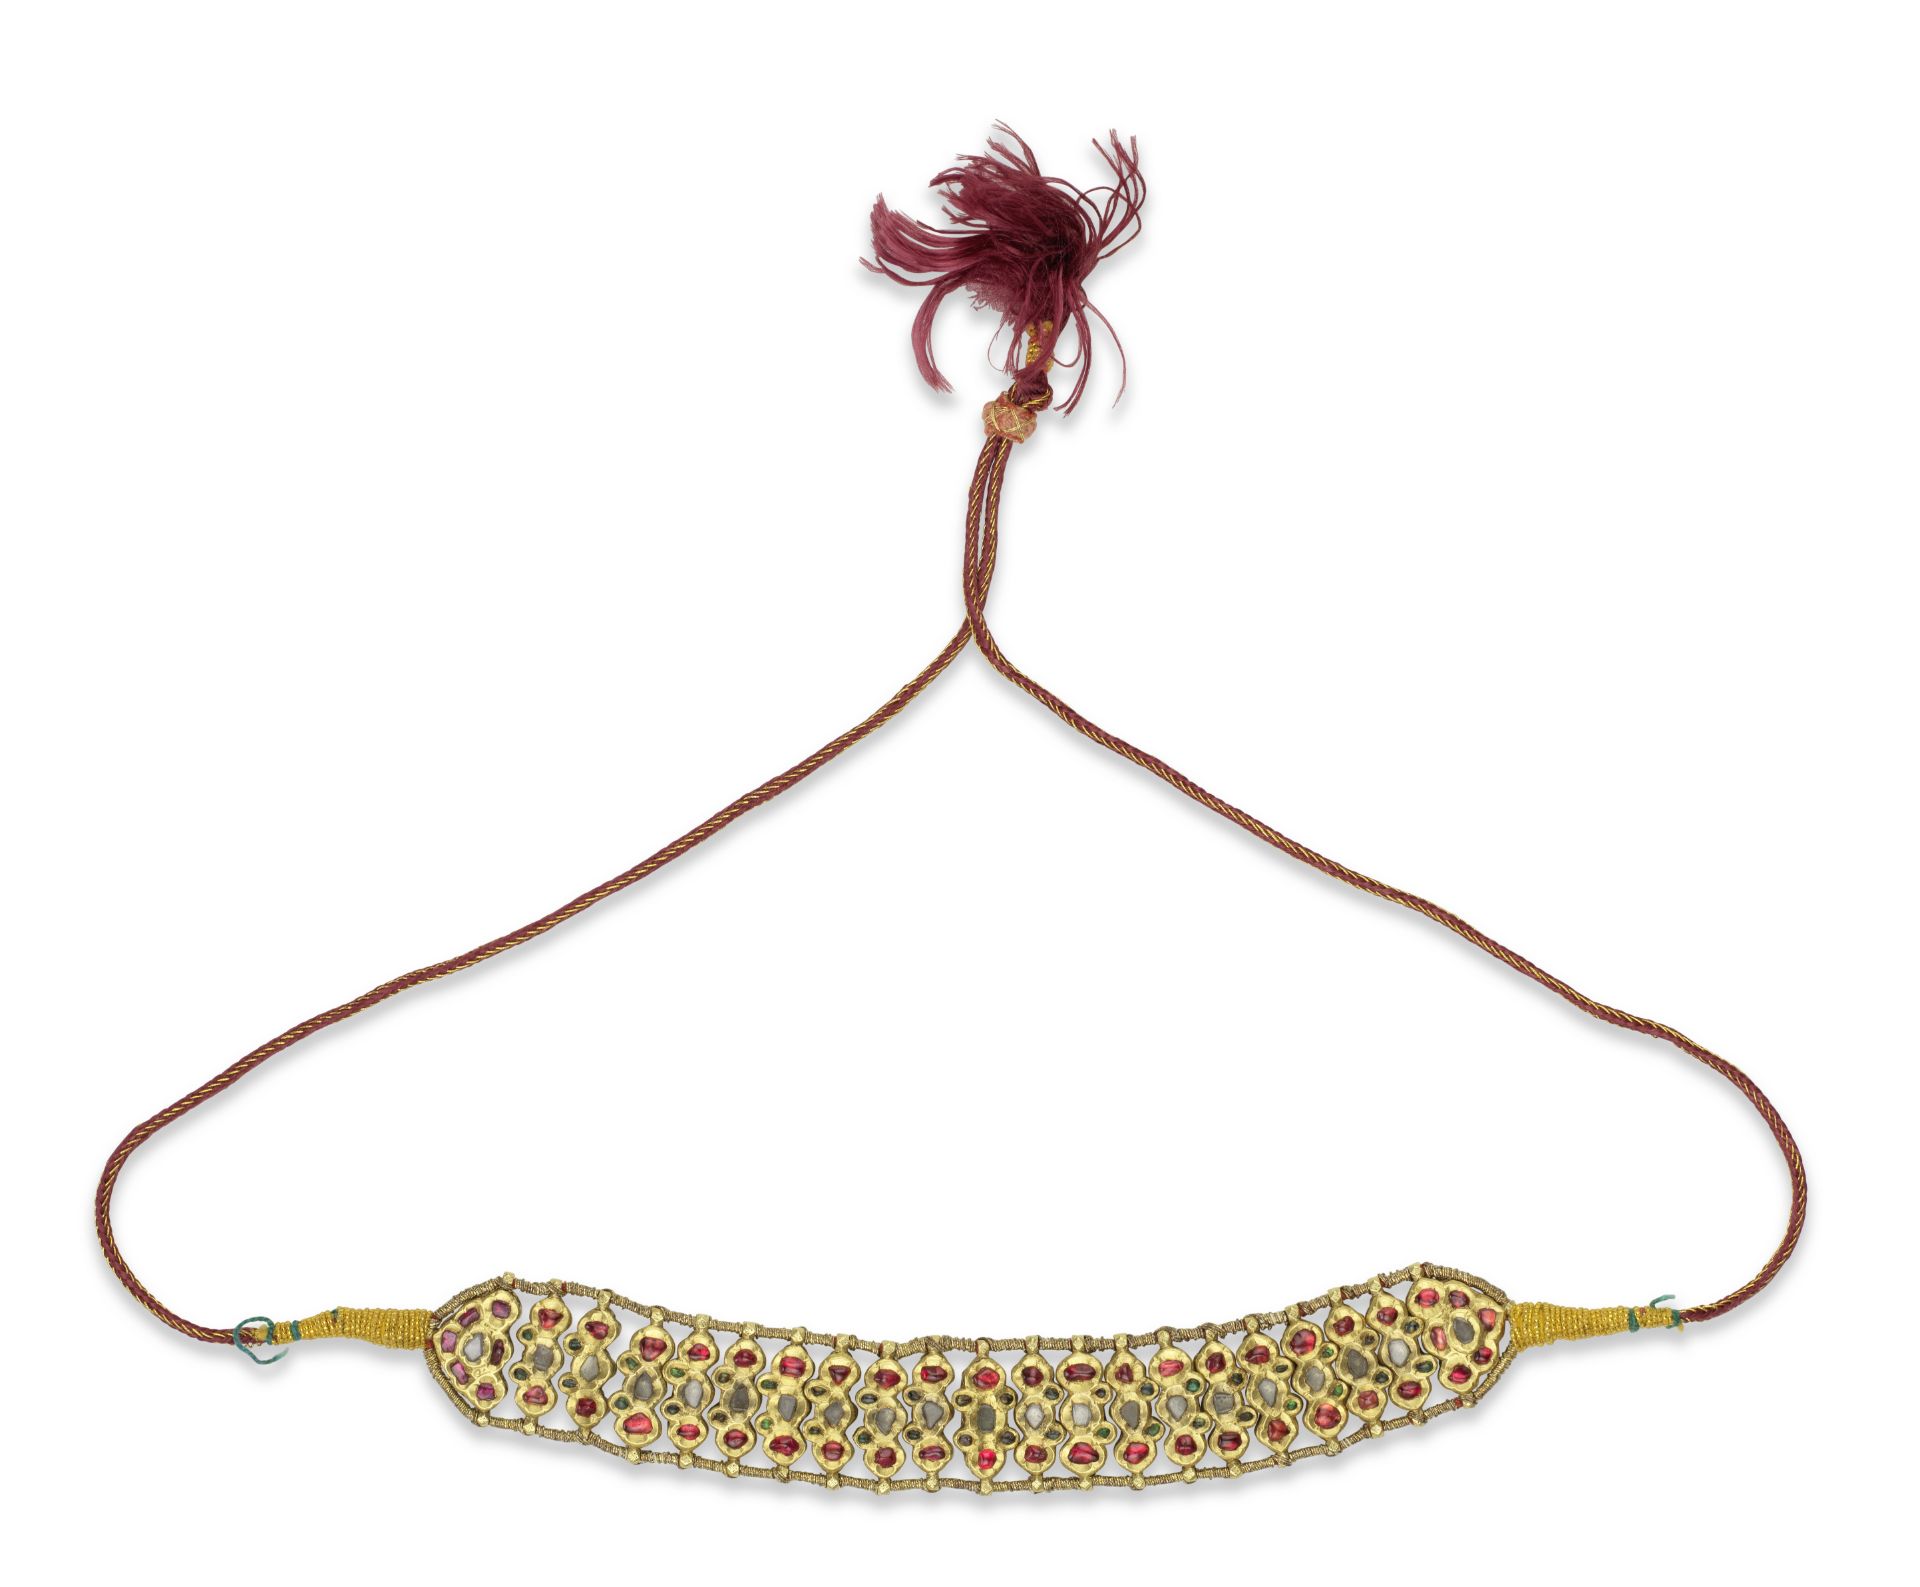 A gem-set gold choker necklace (guluband) South India, 19th/ 20th Century